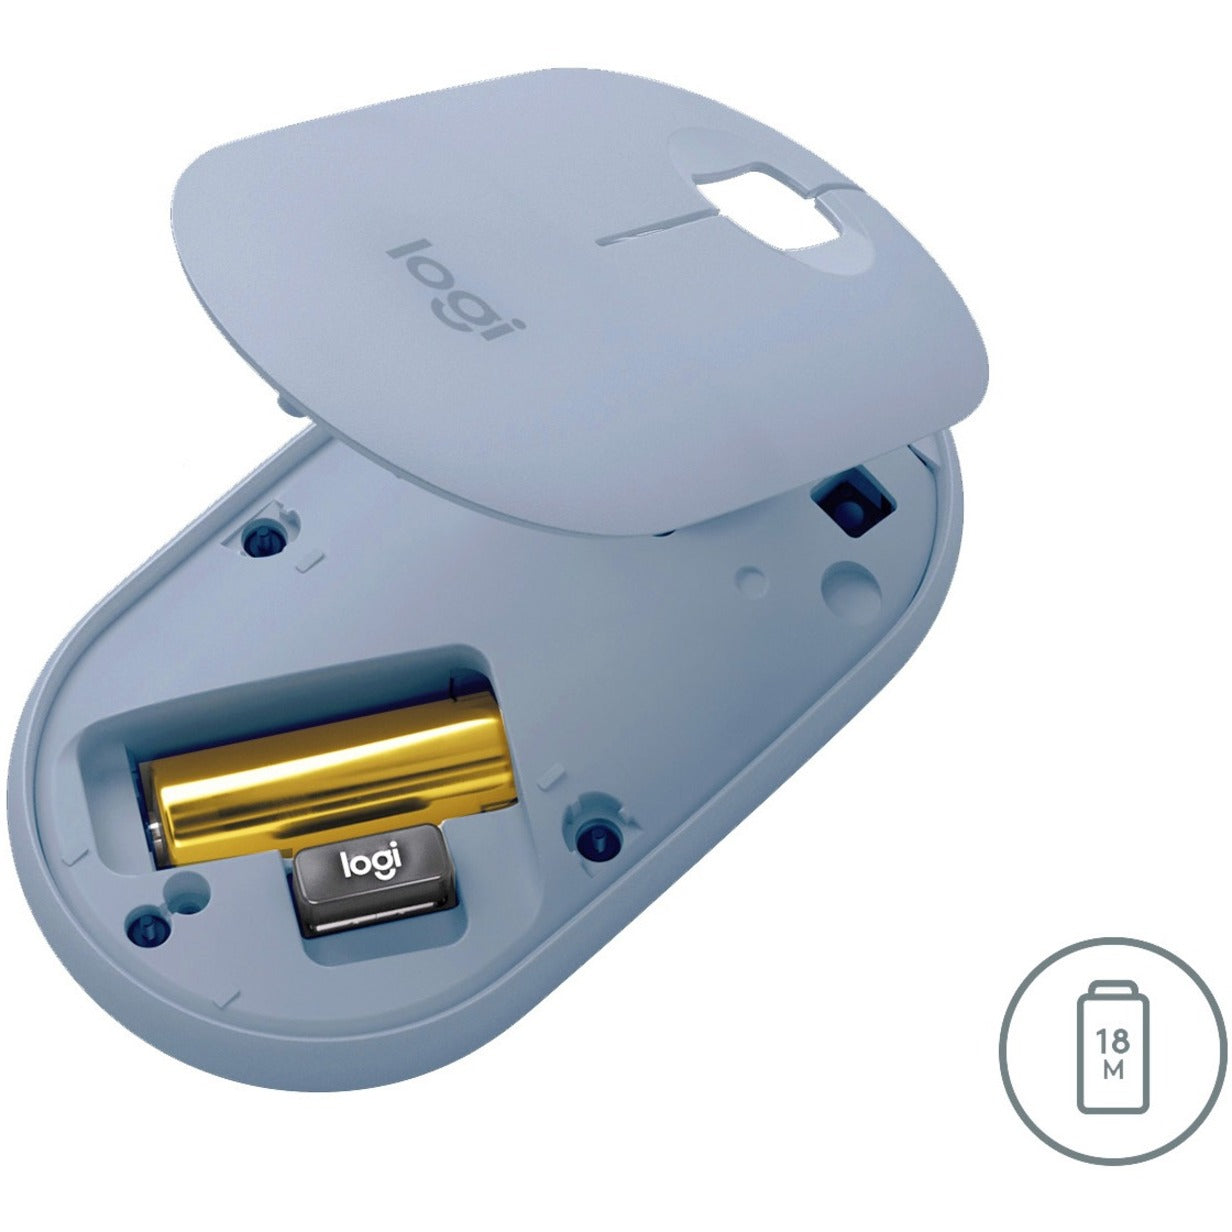 Logitech 910-005773 Pebble Wireless Mouse M350, Bluetooth/Radio Frequency, 1000 dpi, USB